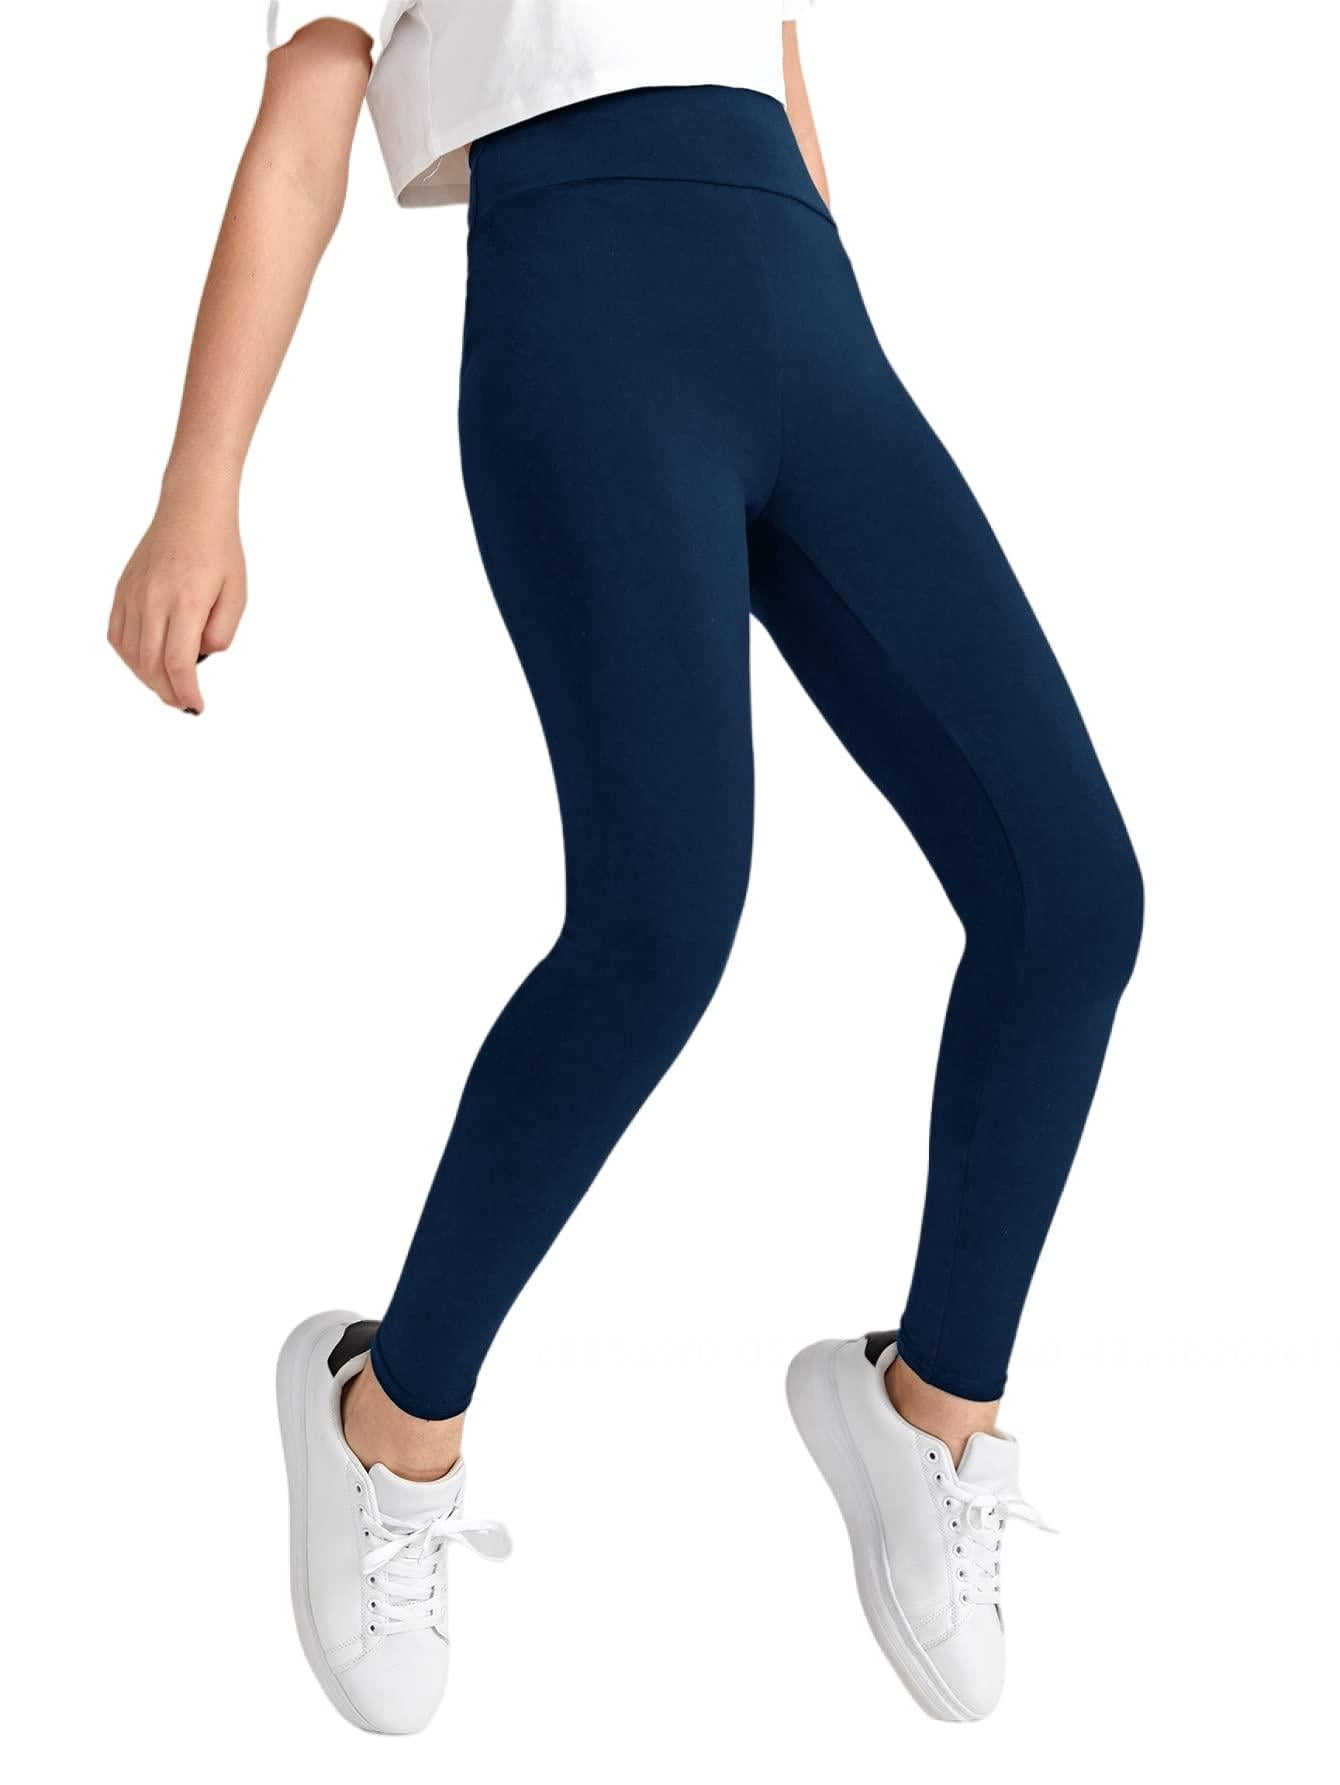 bangyoudaoo Girl's Wideband Waist Leggings High Waisted Tights Workout Yoga  Skinny Pants 